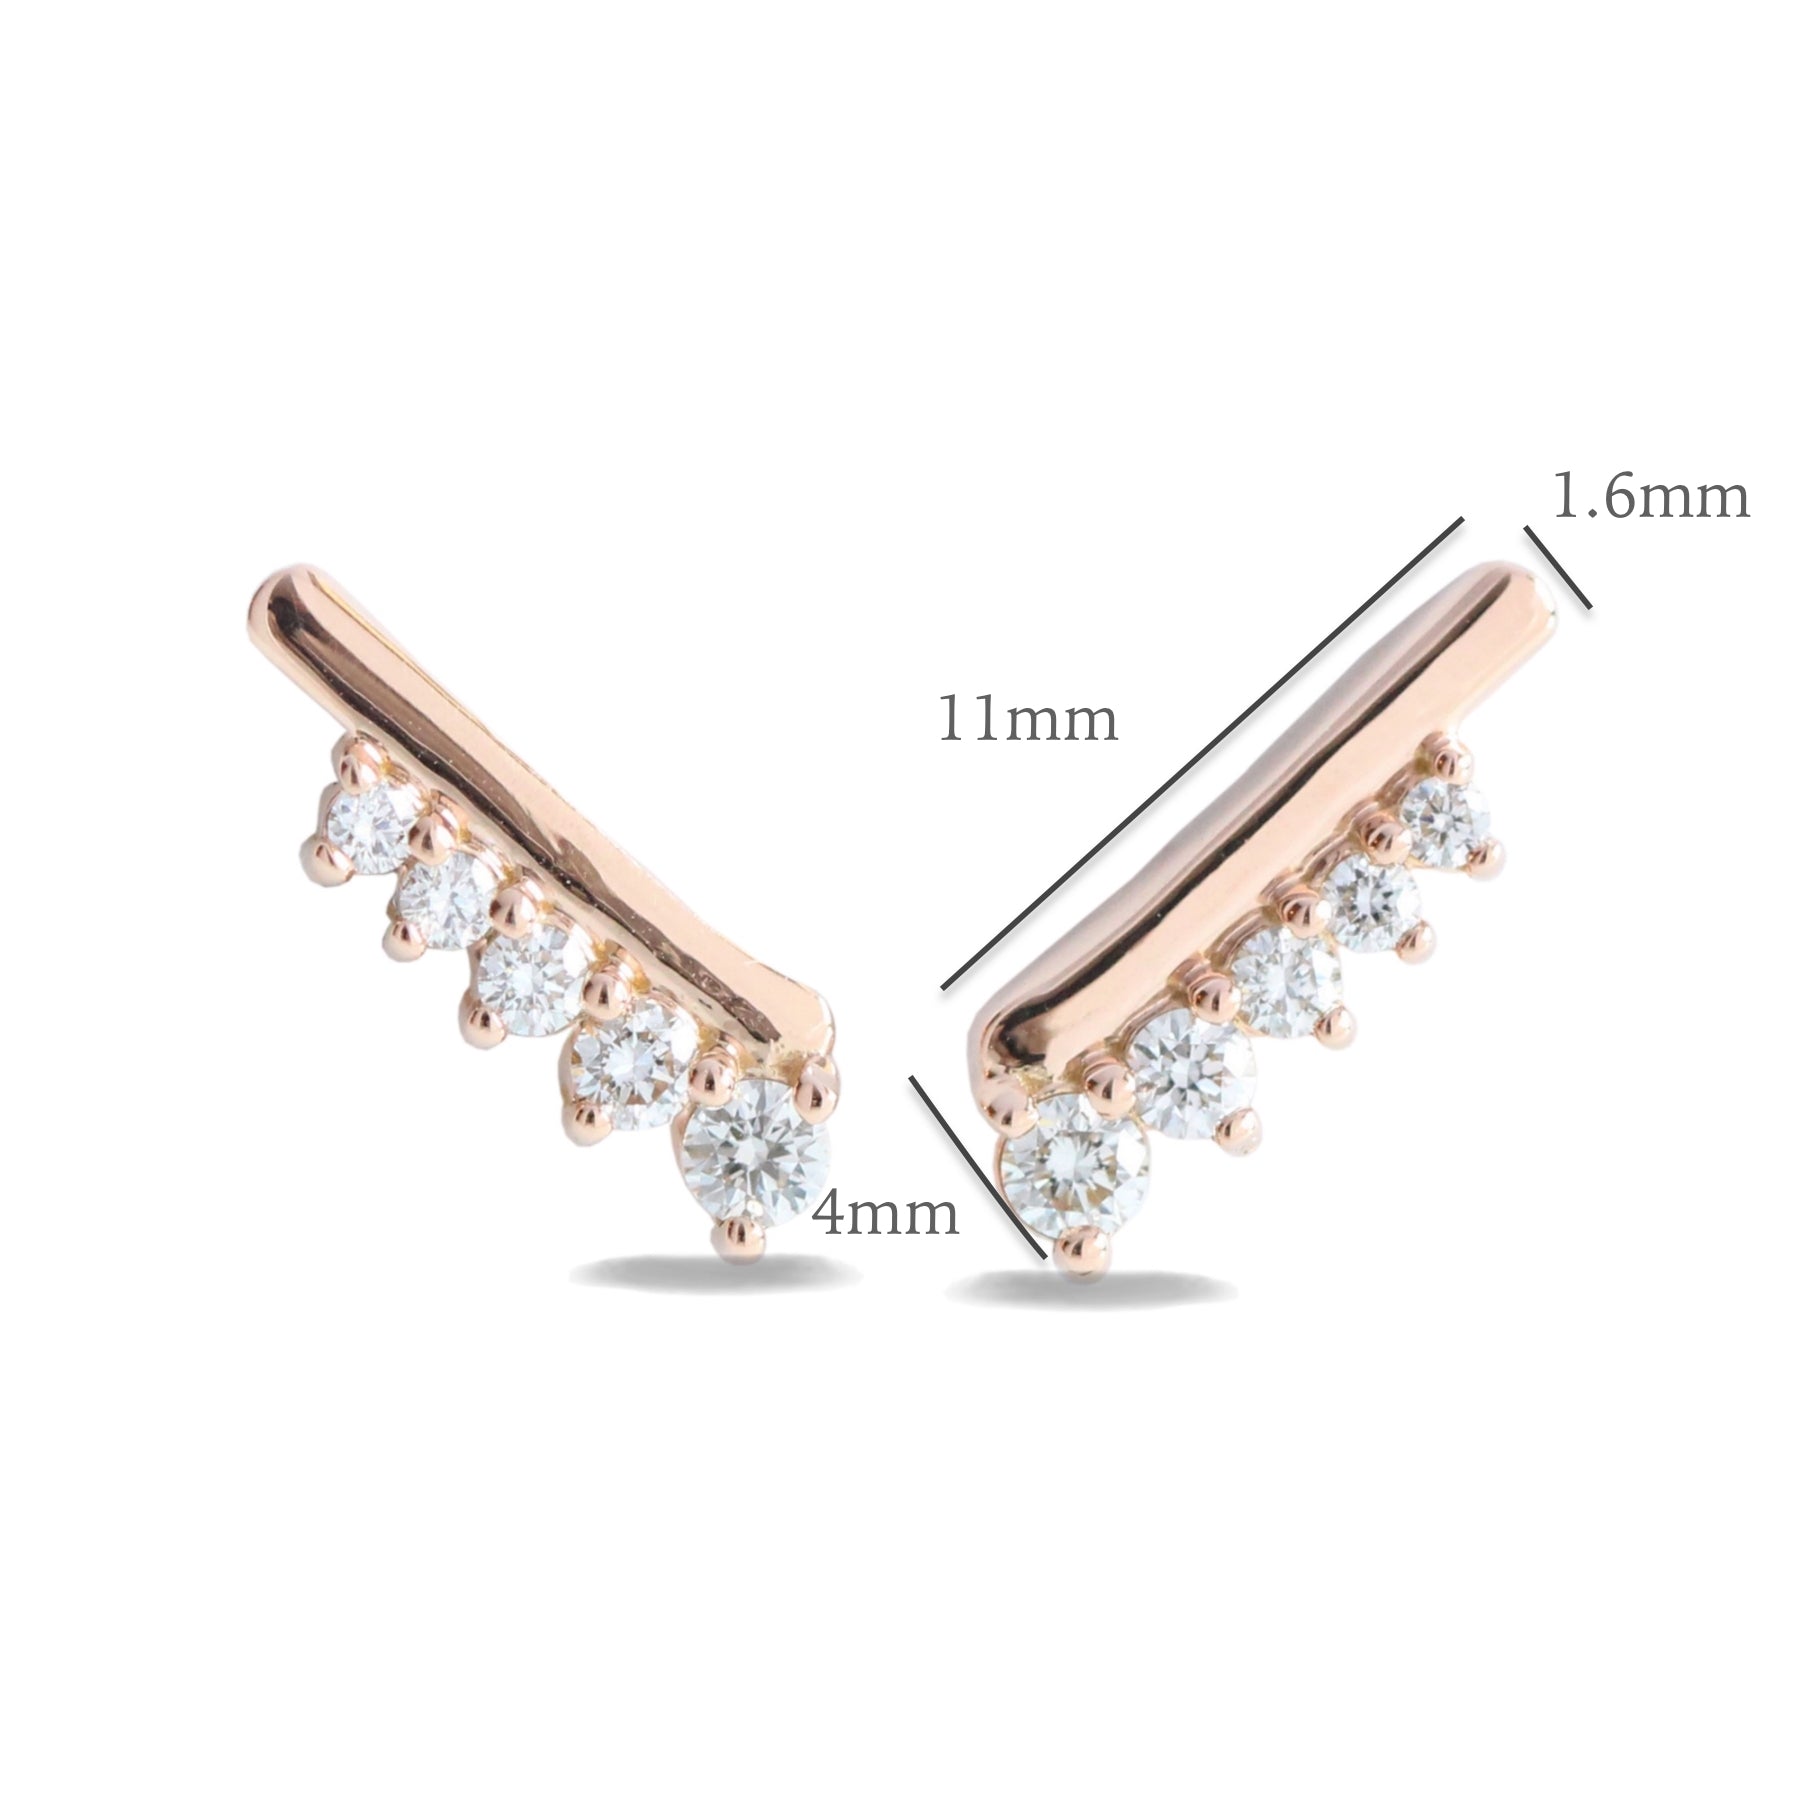 Tiara diamond earrings in rose gold studs la more design jewelry